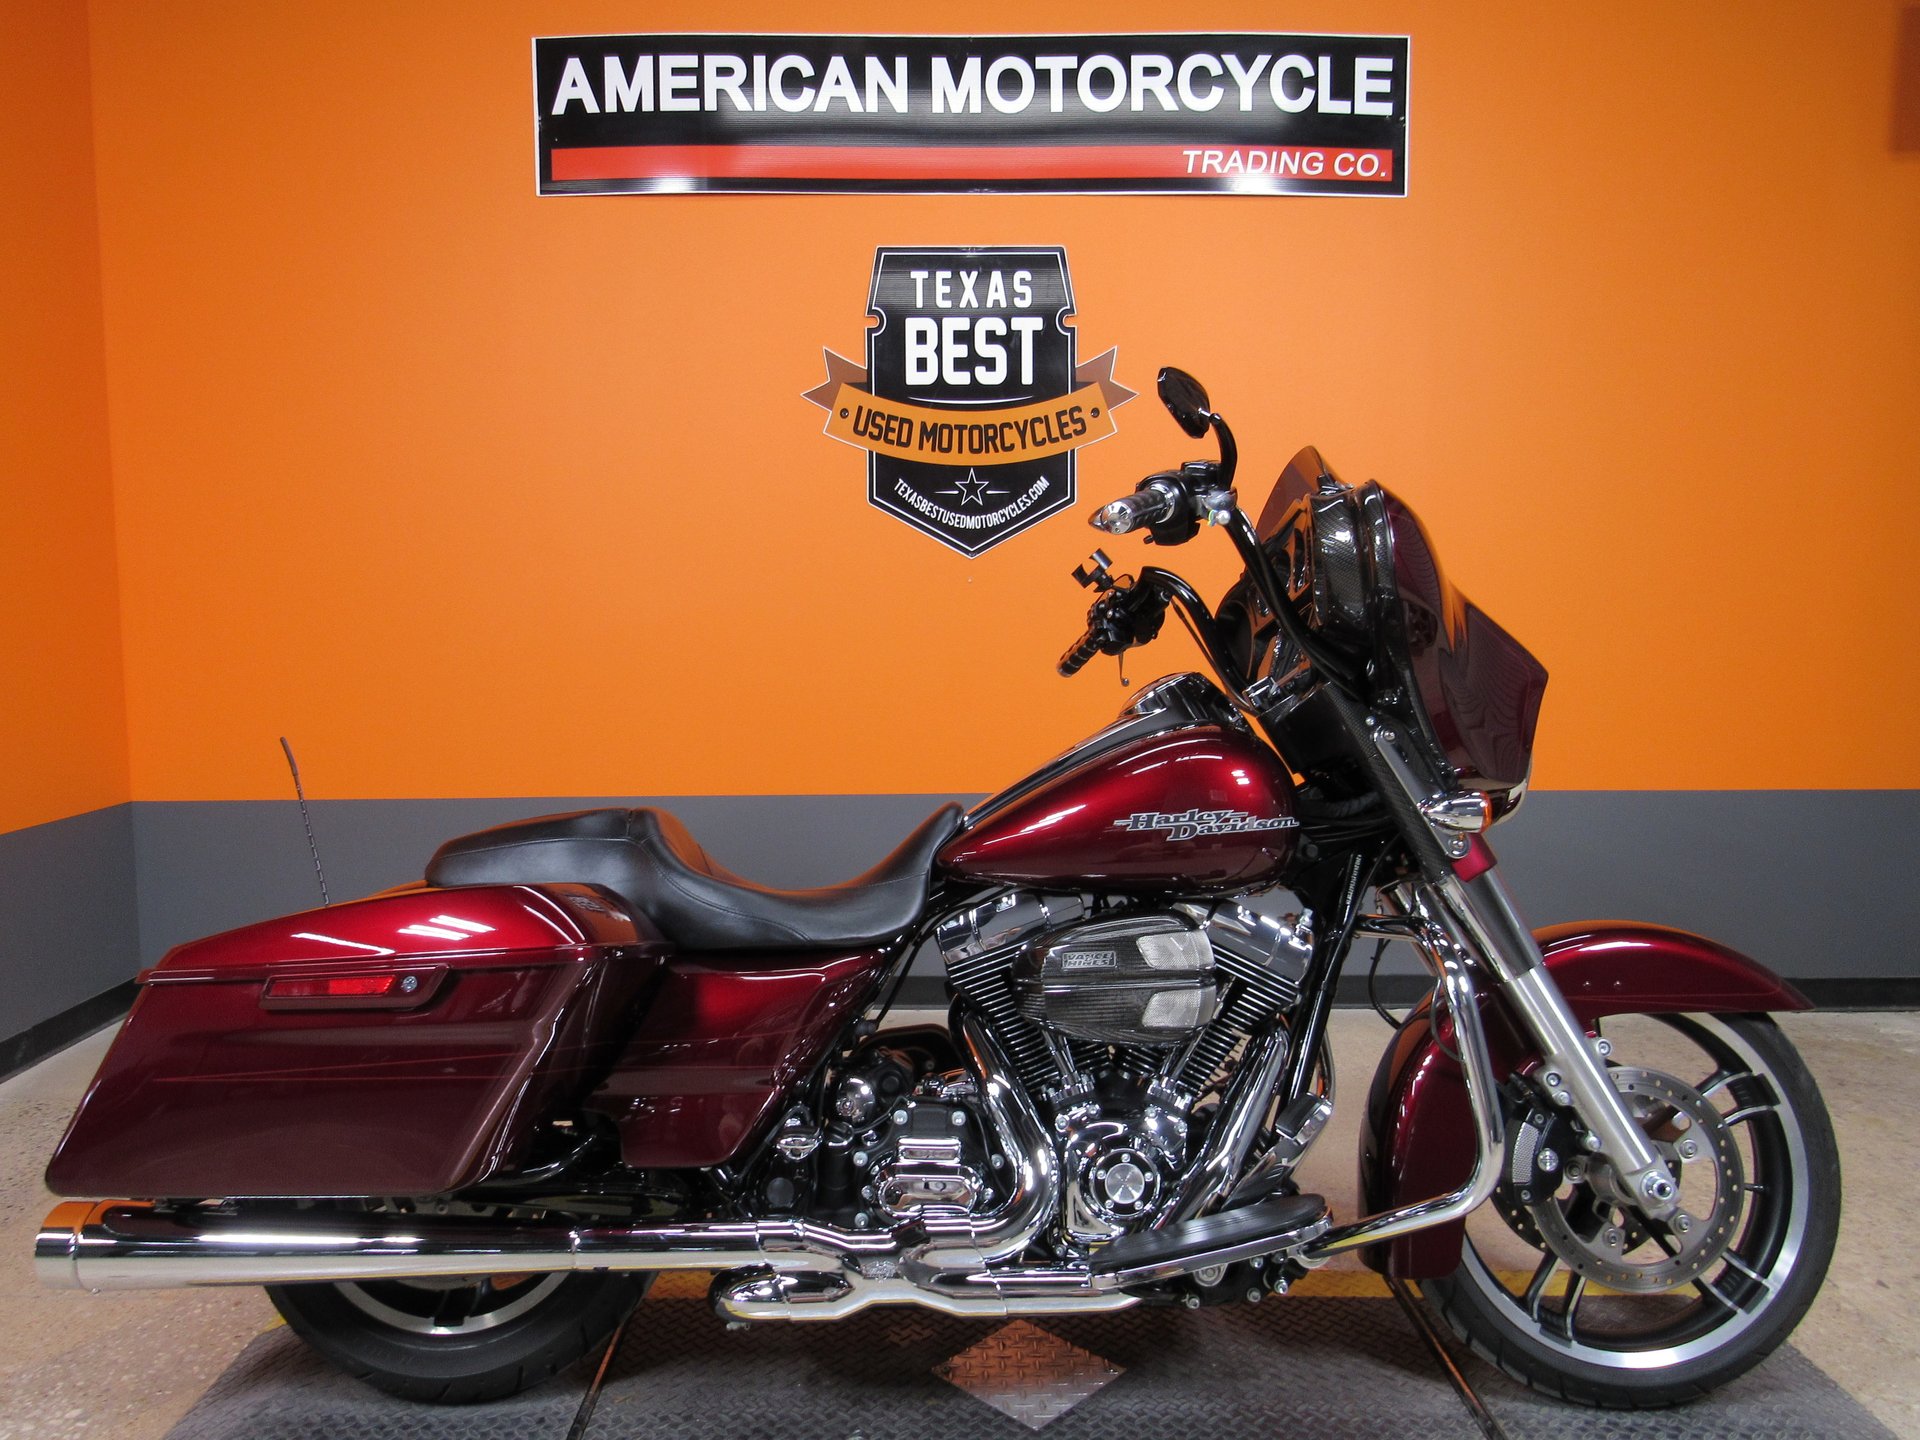 2014 Harley Davidson Street Glide American Motorcycle Trading Company Used Harley Davidson Motorcycles